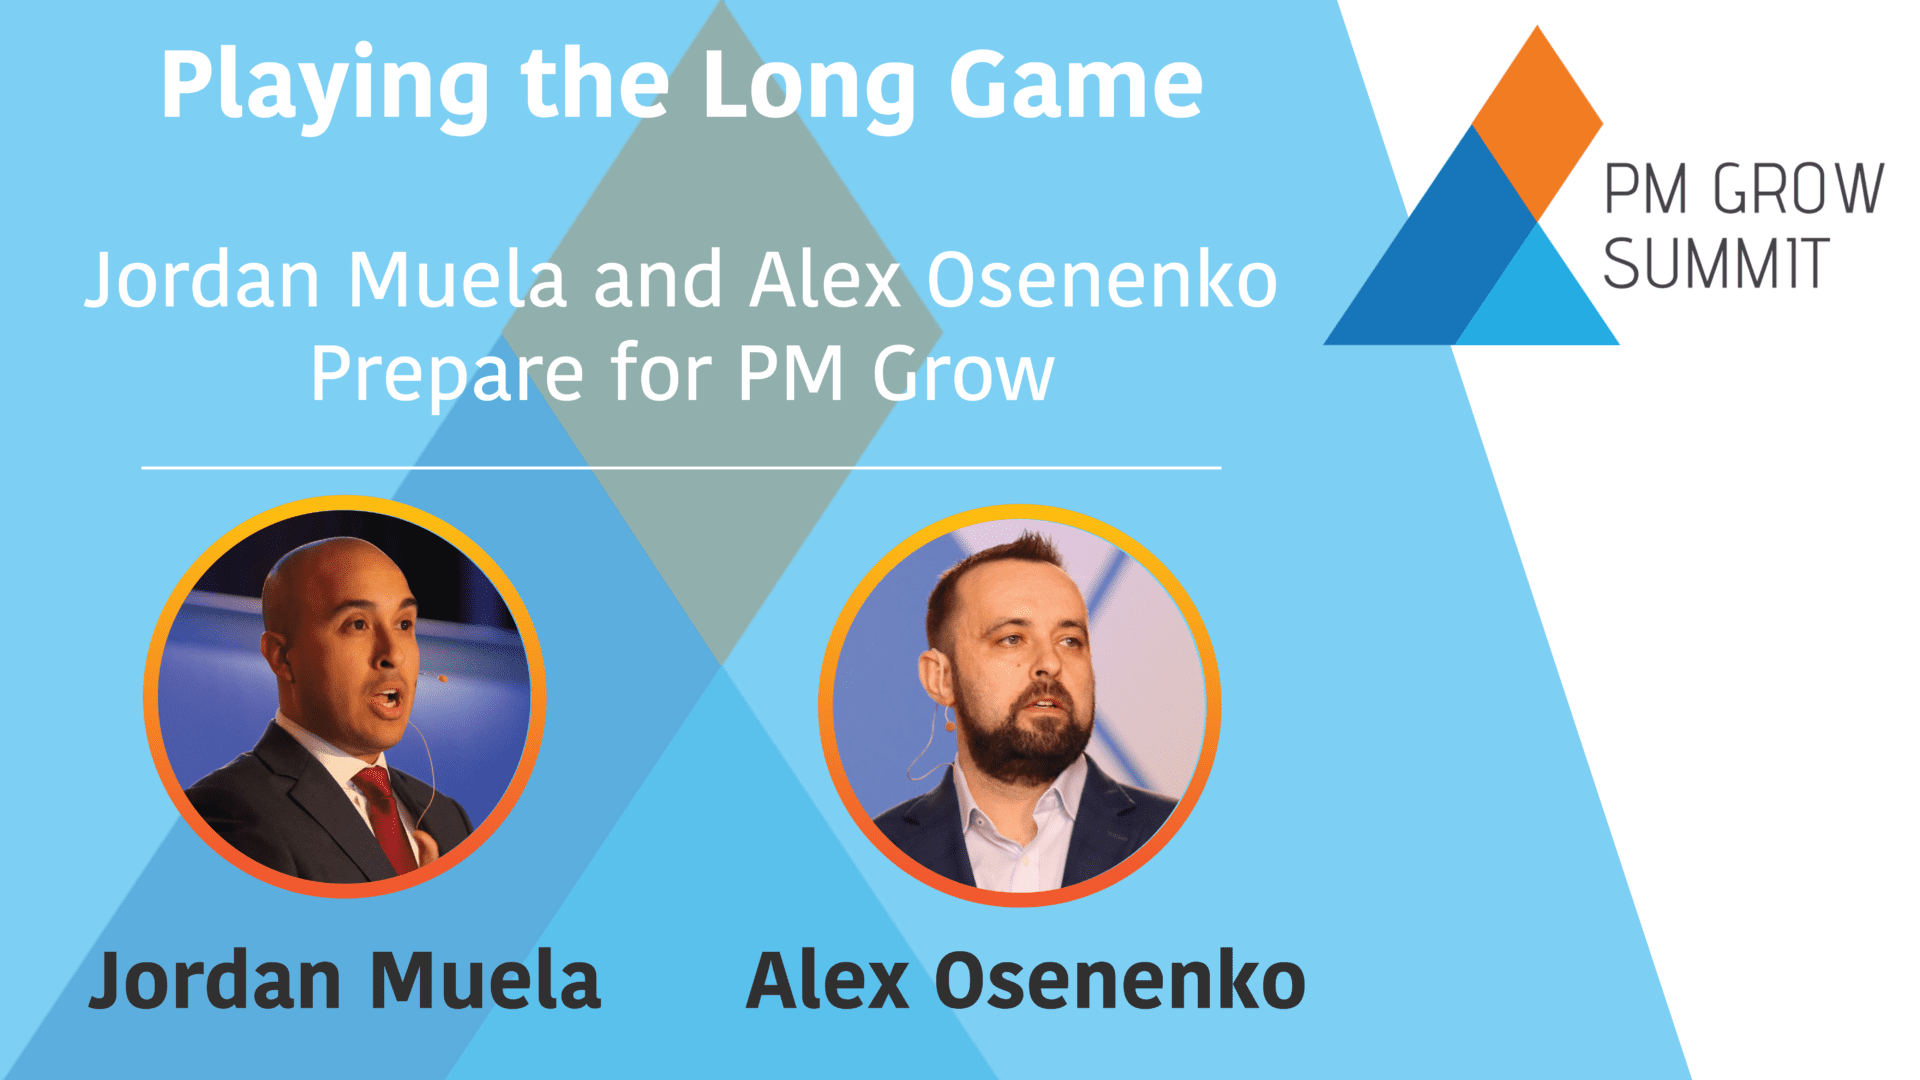 Jordan Muela and Alex Osenenko Prepare for the 2019 PM Grow Summit